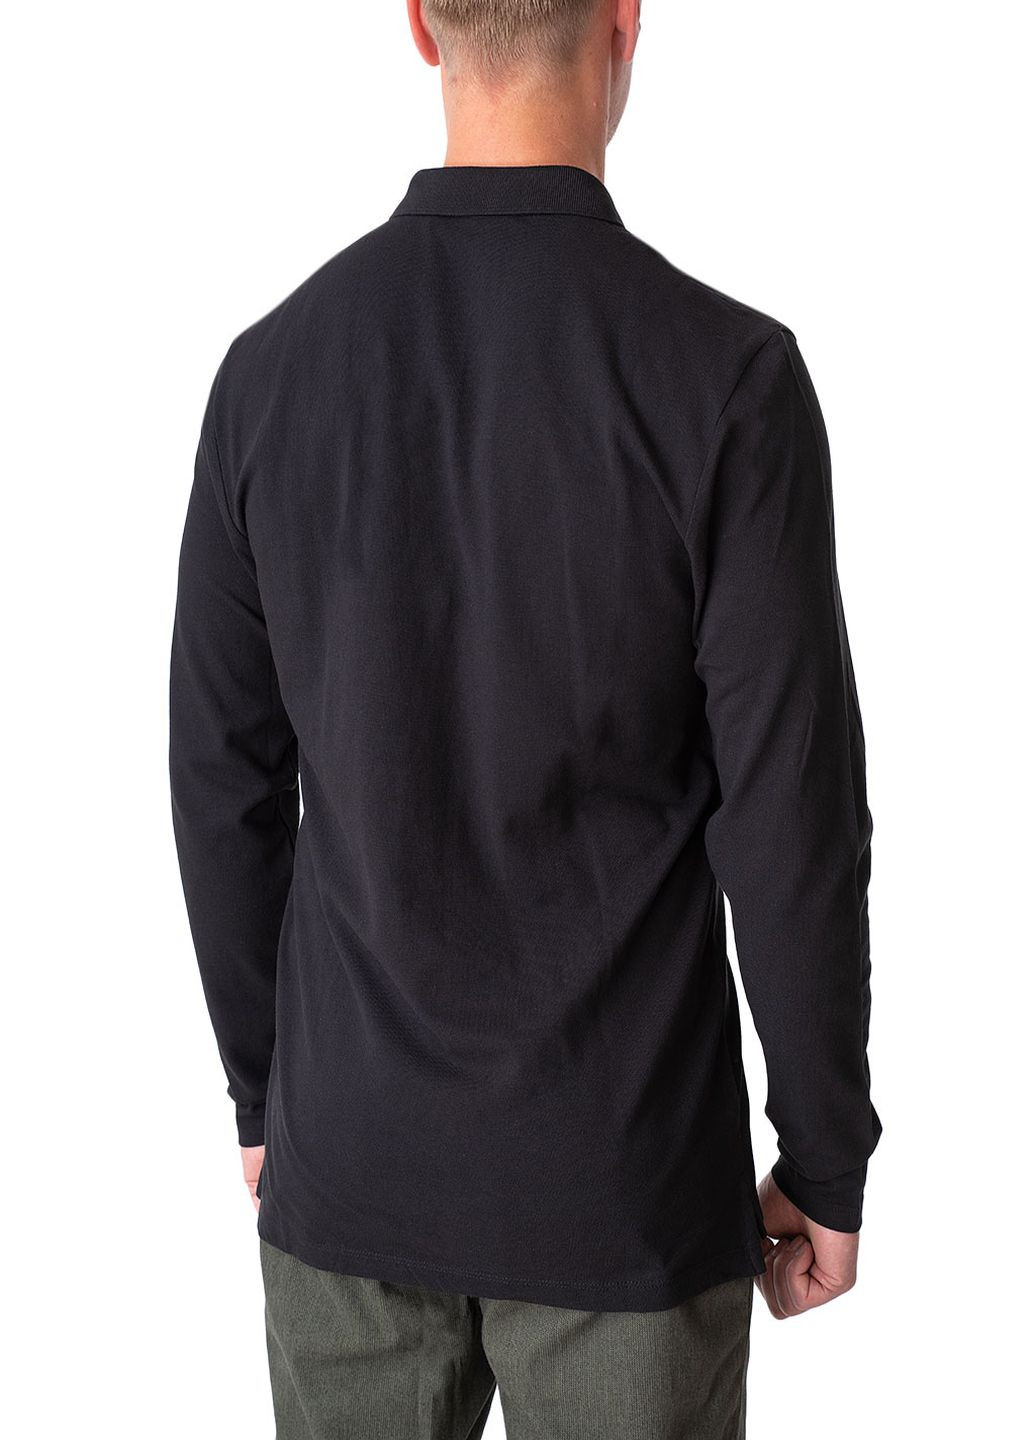 Черная футболка-поло для мужчин Blend однотонная